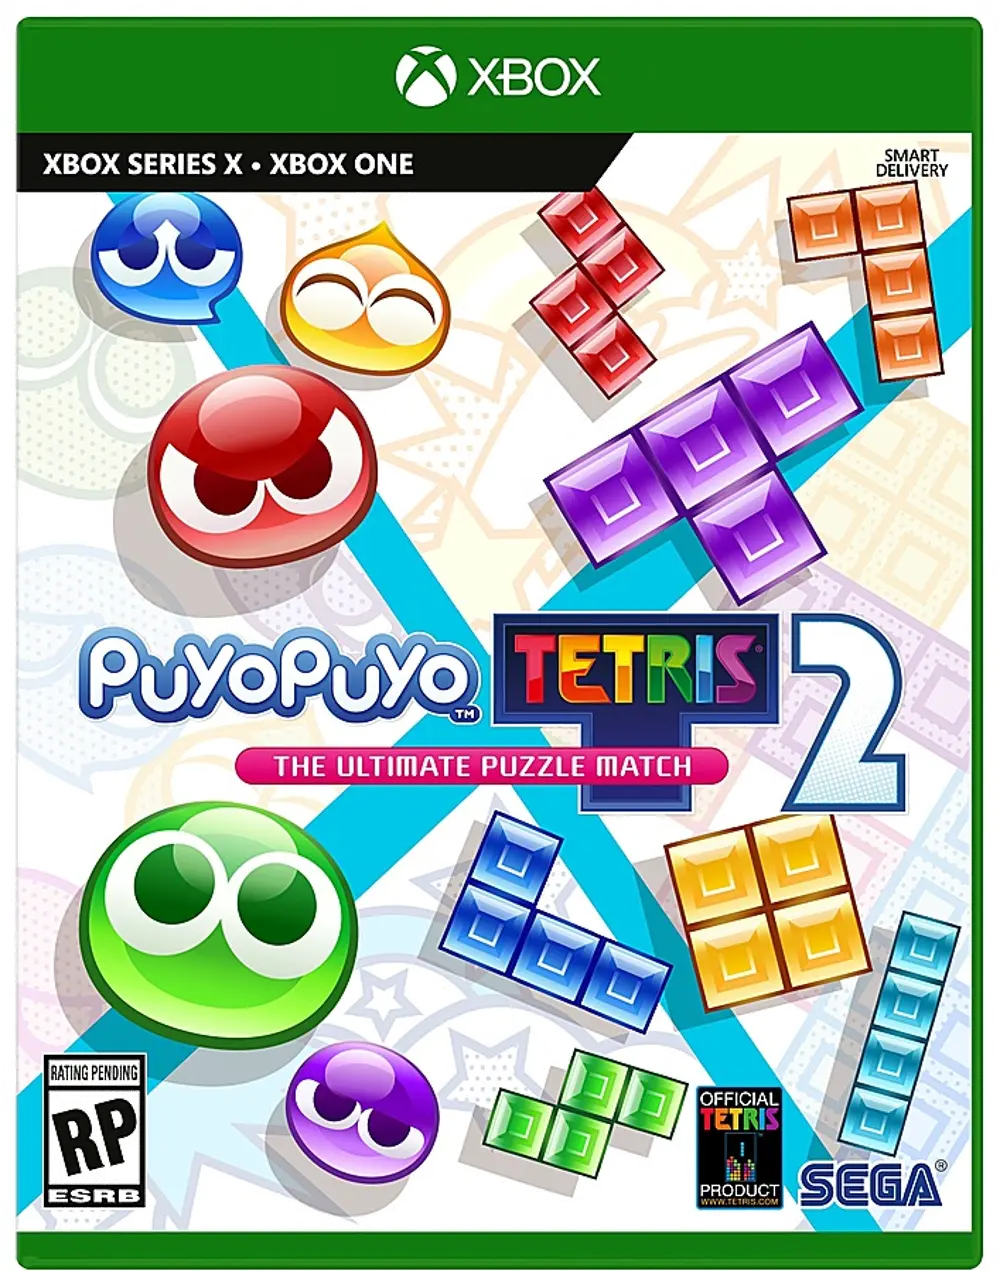 XBSX/PUYO,TETRIS2 Puyo Puyo Tetris 2 - Xbox One, Xbox Series X-1